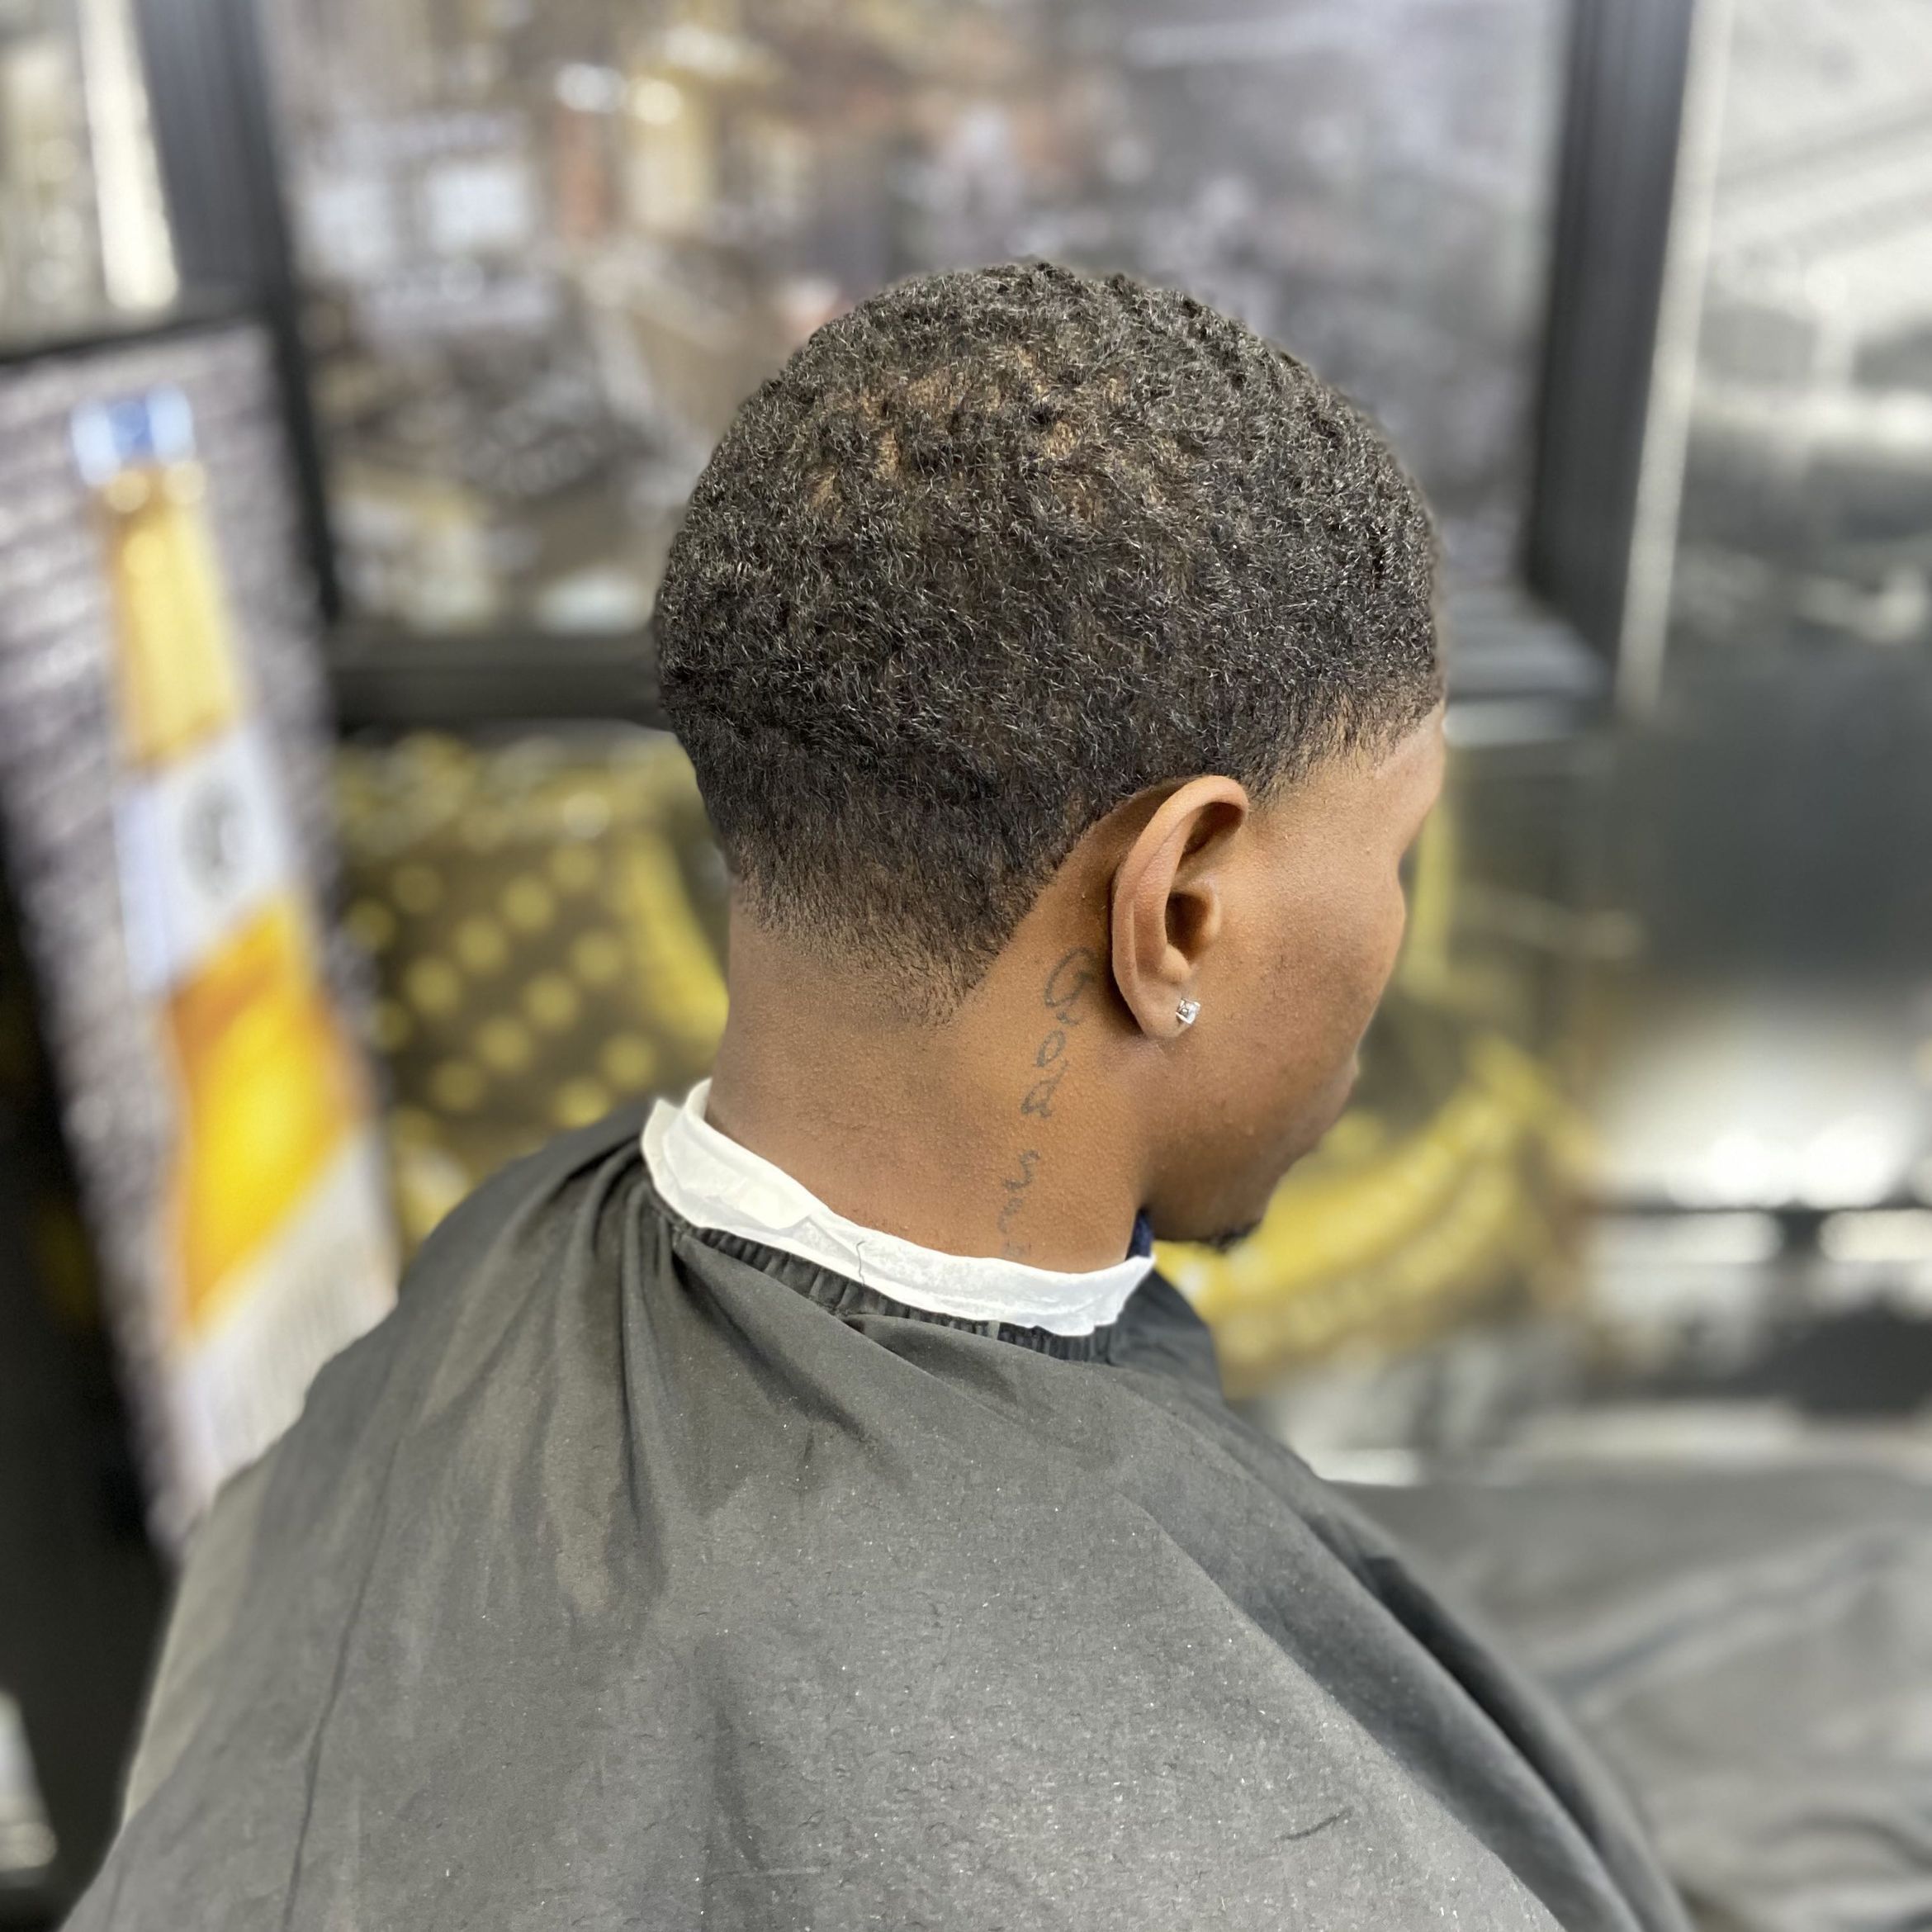 Regular Haircut “No Scissors” portfolio